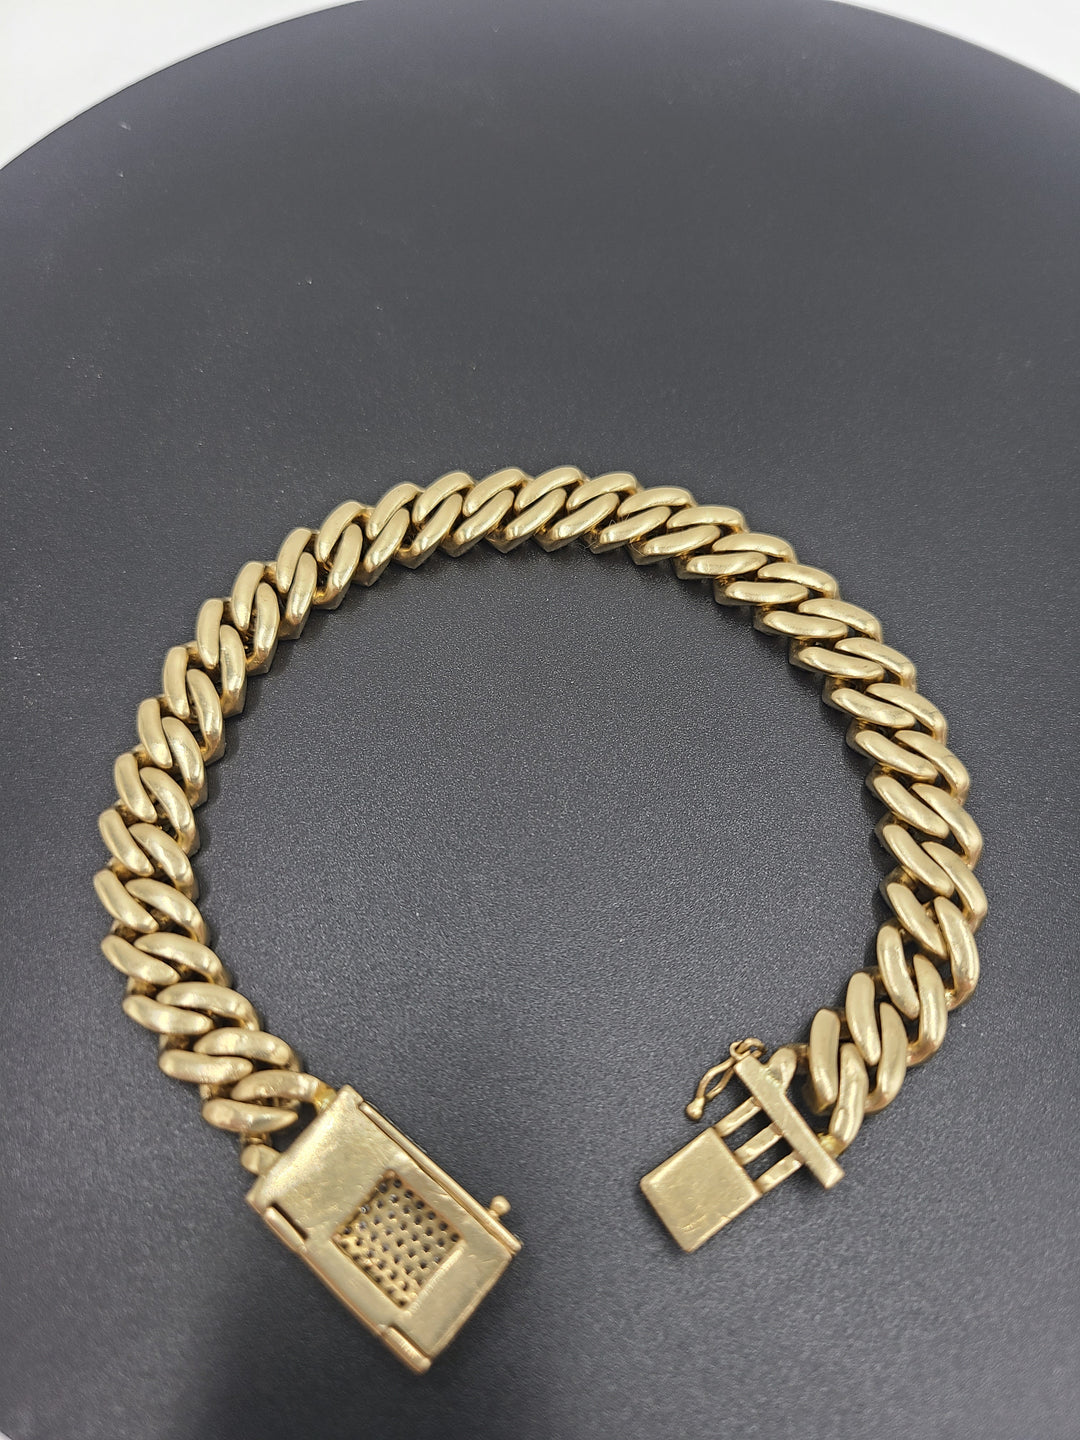 k758 Gorgeous Unisex 14kt Yellow Gold Diamond Curb Link Bracelet